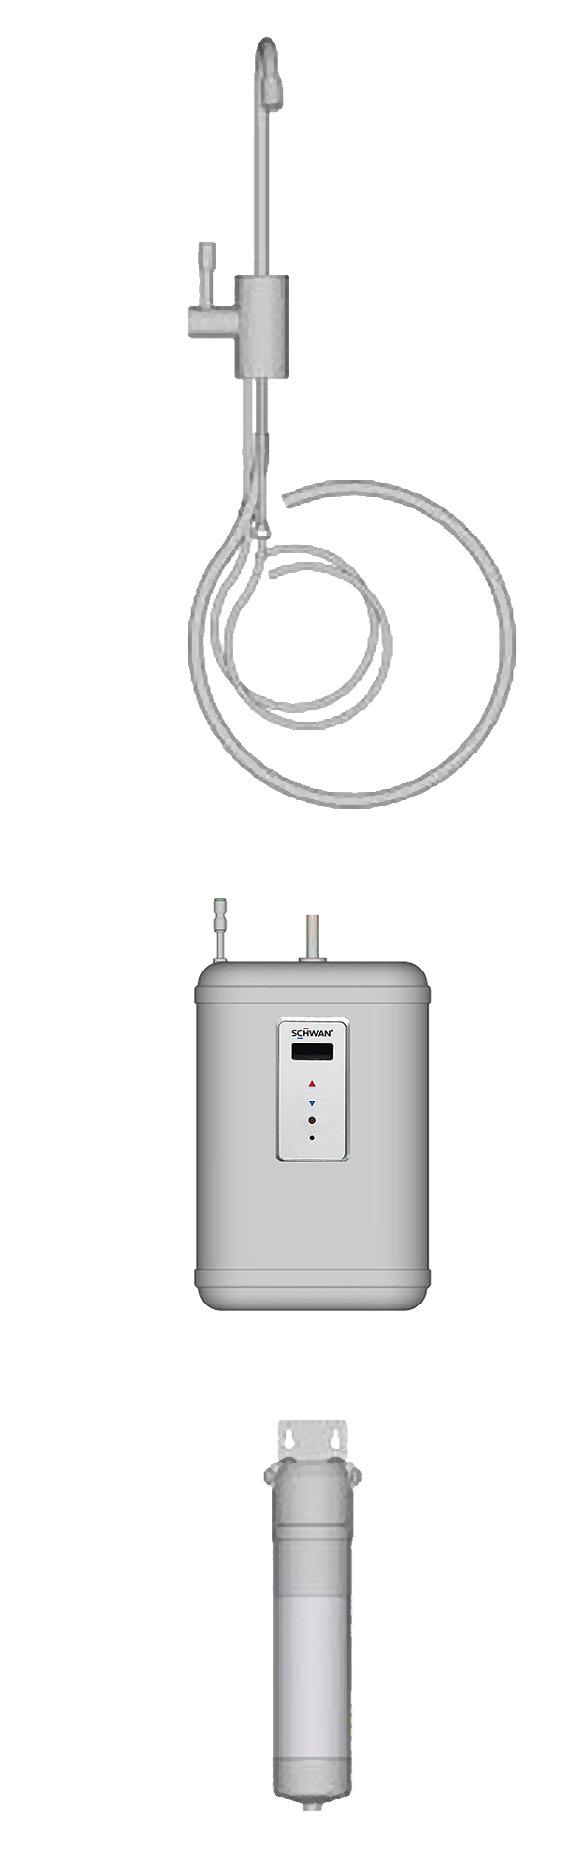 Component Checklist Main Components Schwan Dispenser Schwan Boiling Tank Schwan Filter System